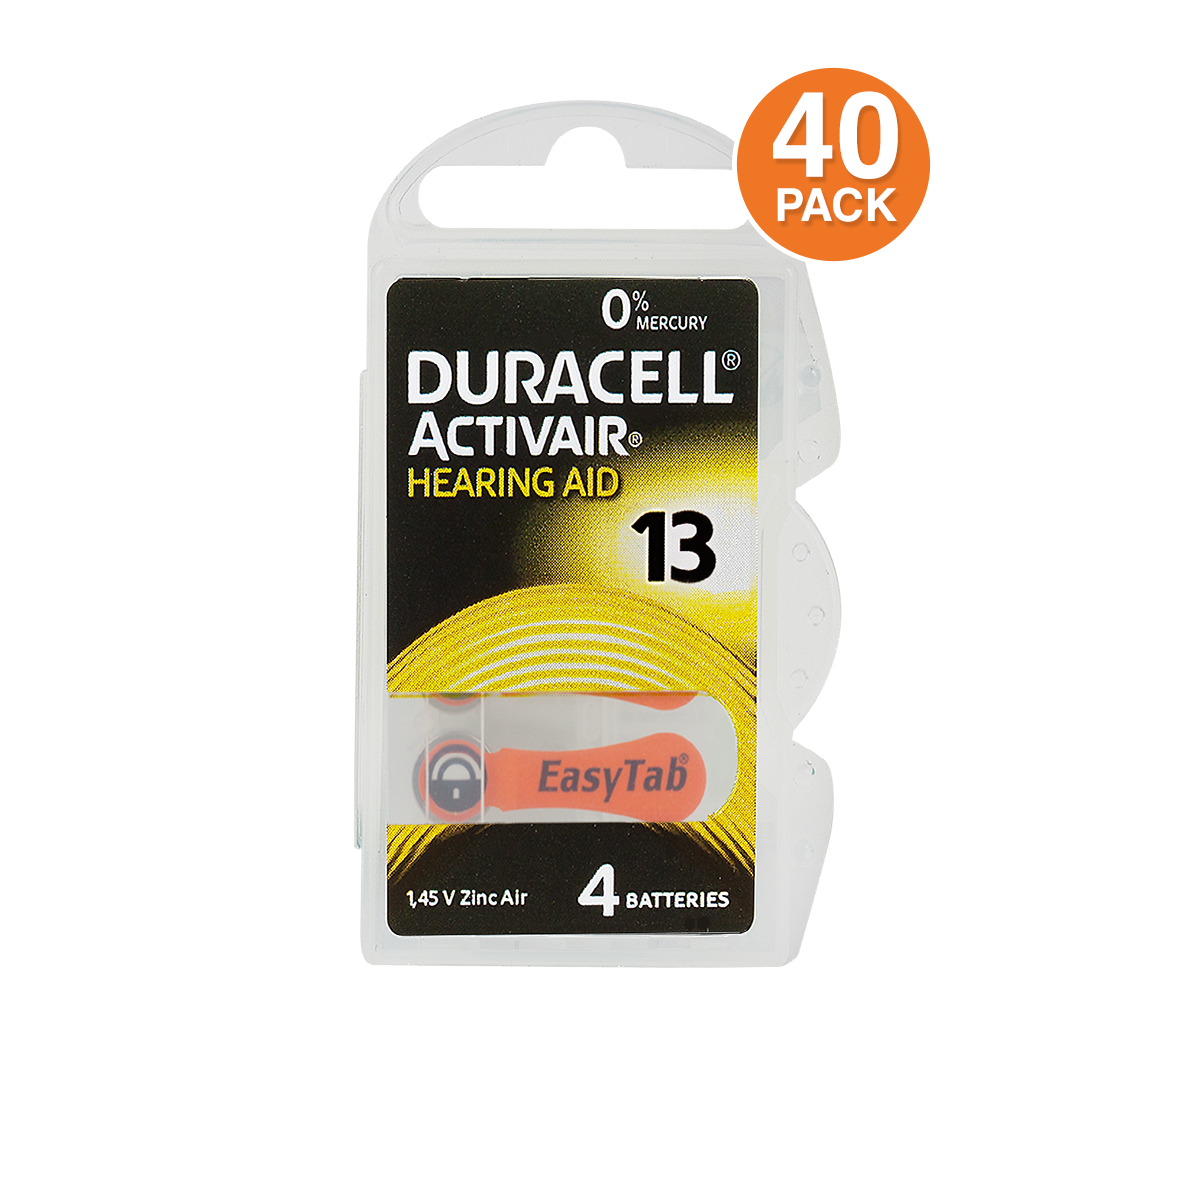 Duracell Activair 13 Hearing Aid Battery (40 PCS) 